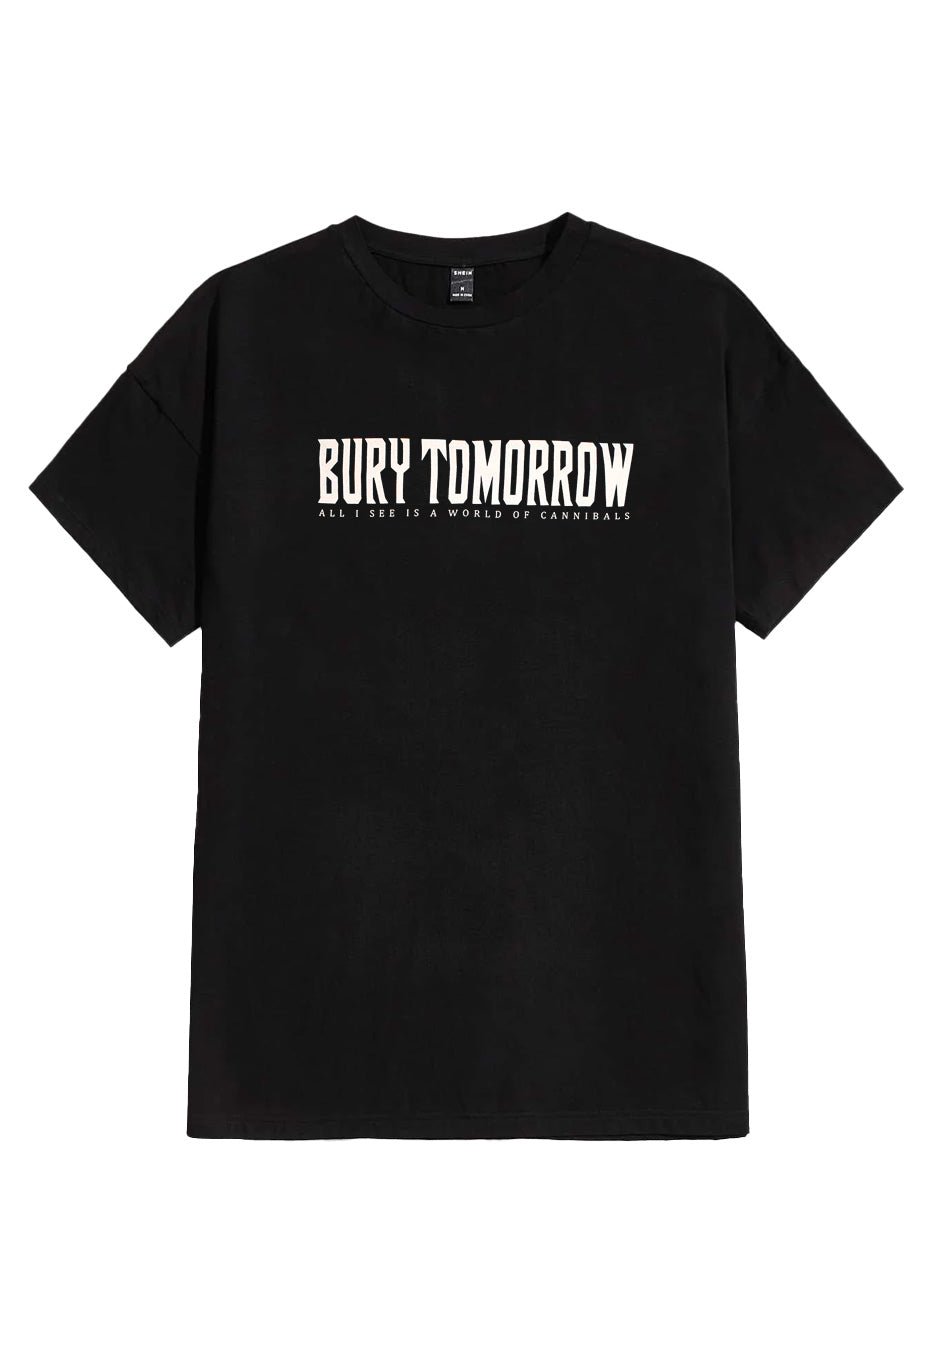 Bury Tomorrow - Vulture - T-Shirt